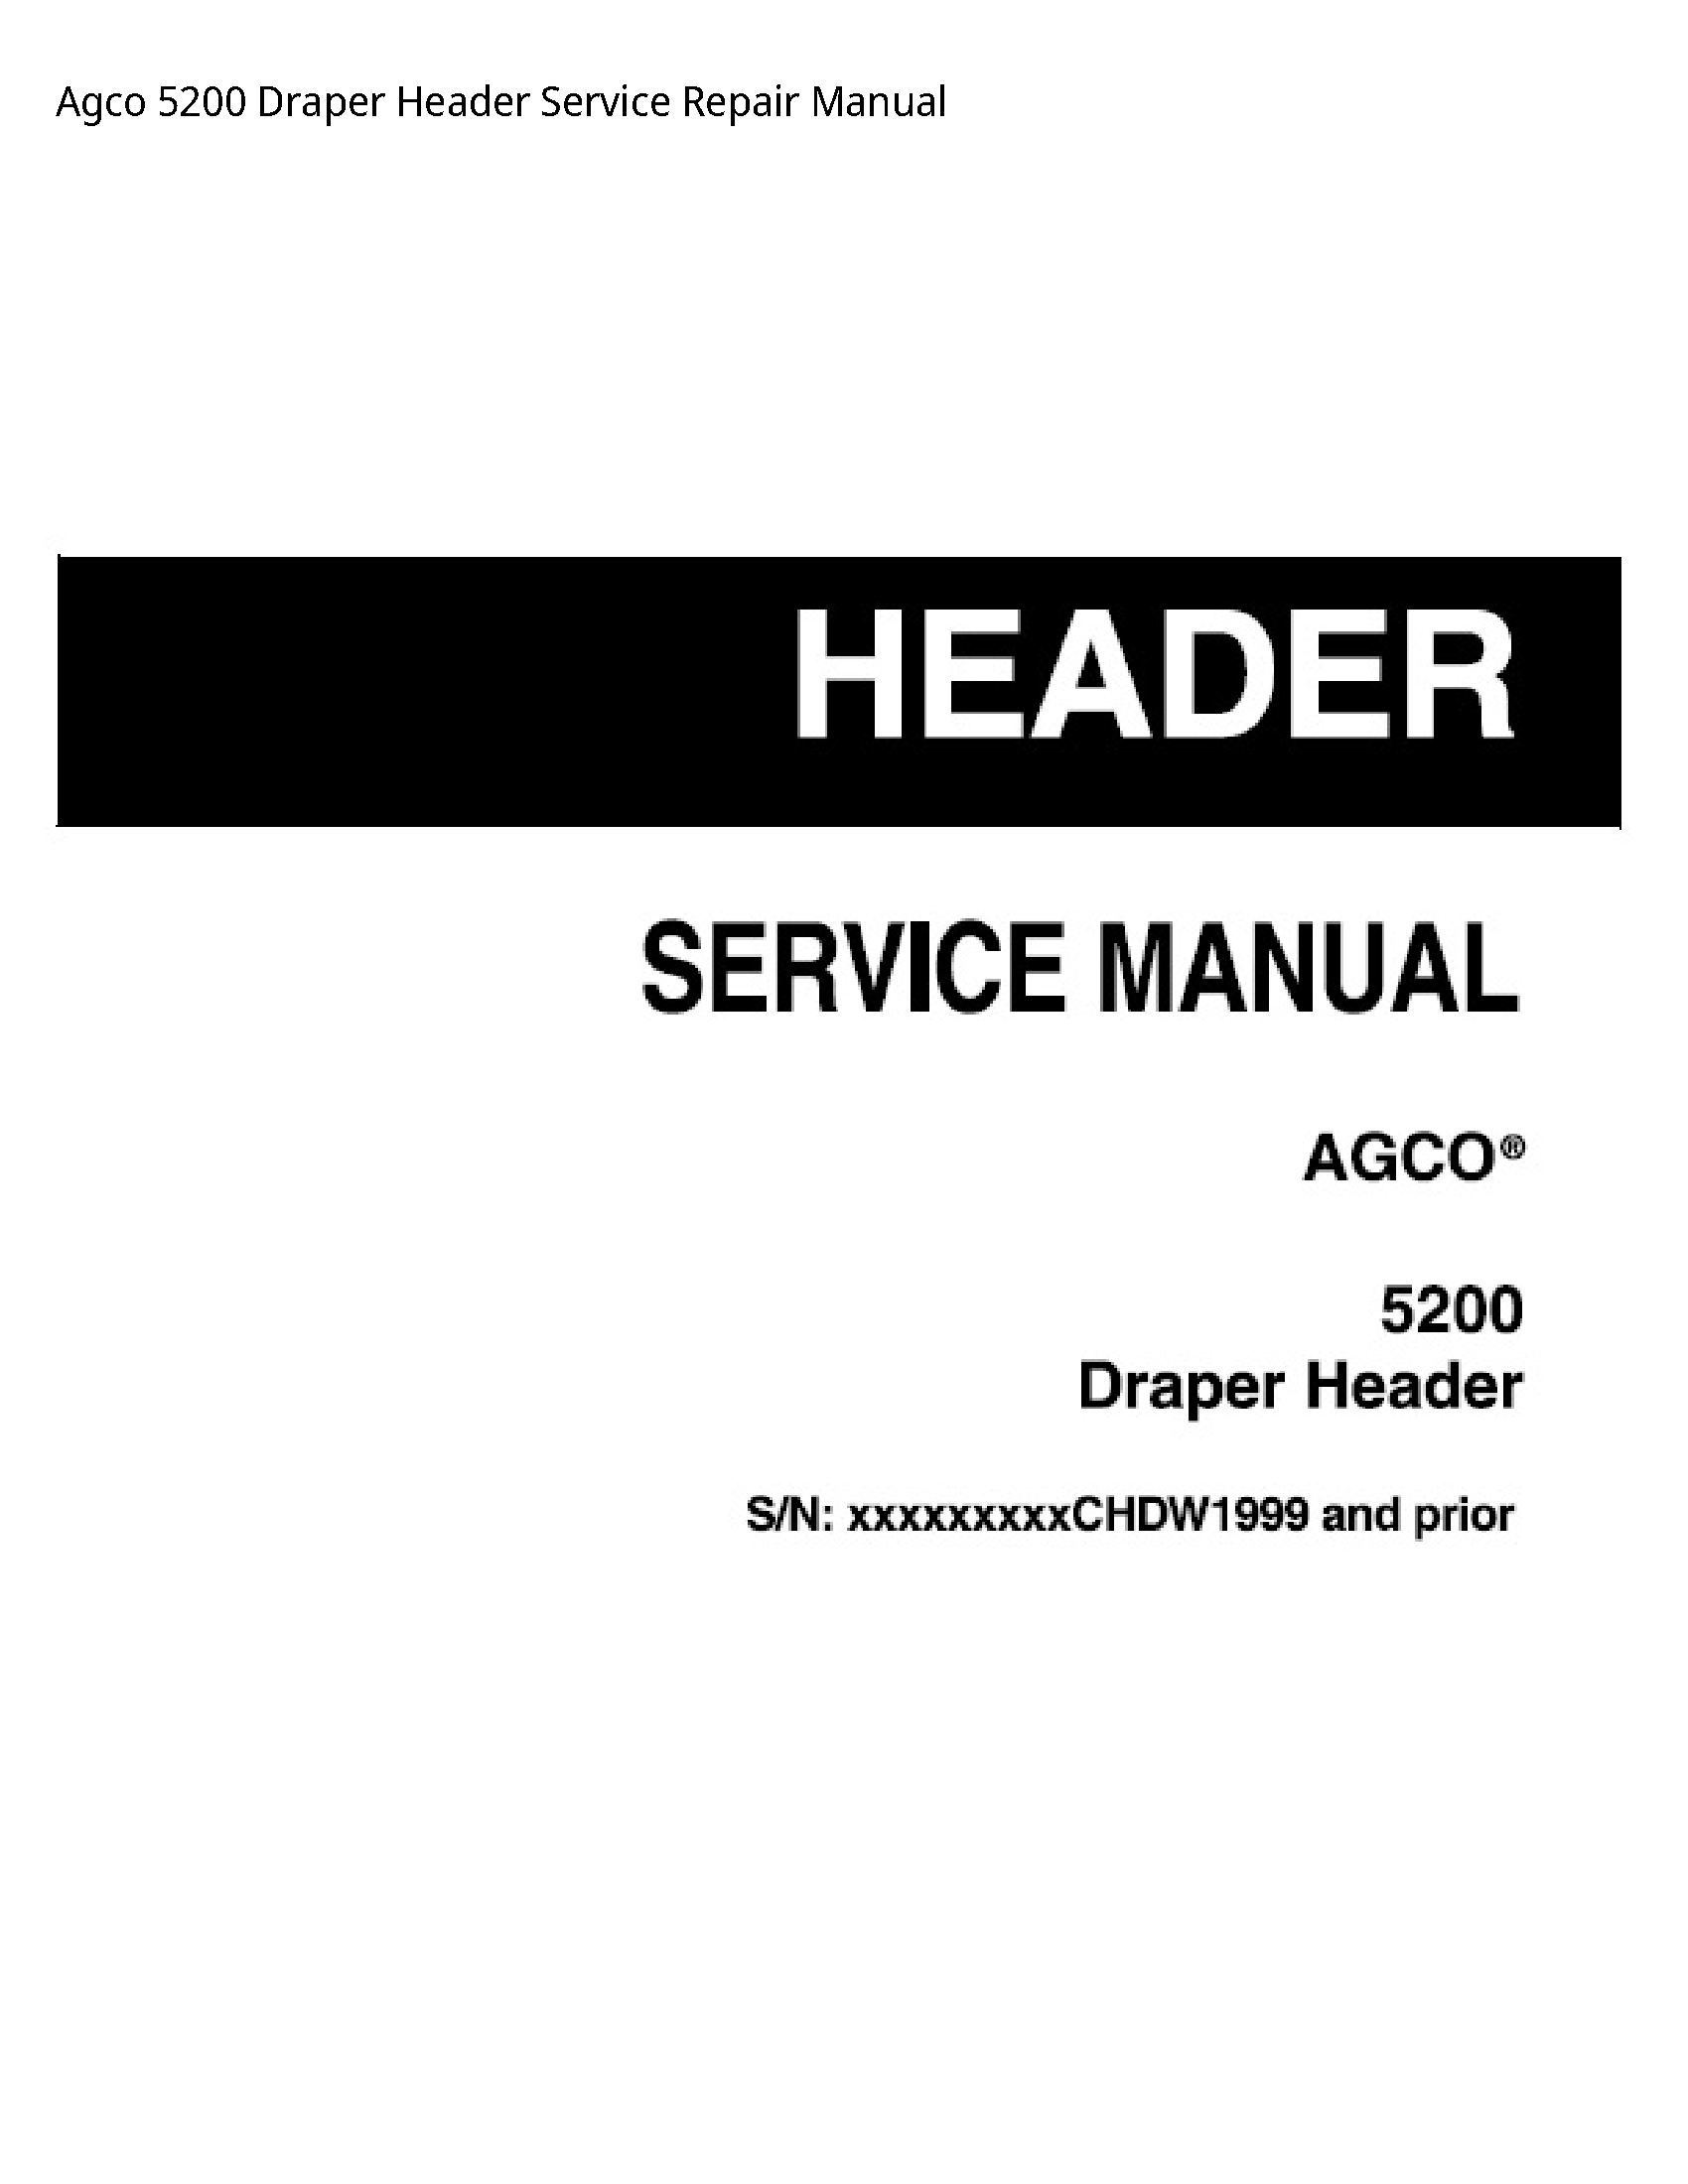 AGCO 5200 Draper Header manual